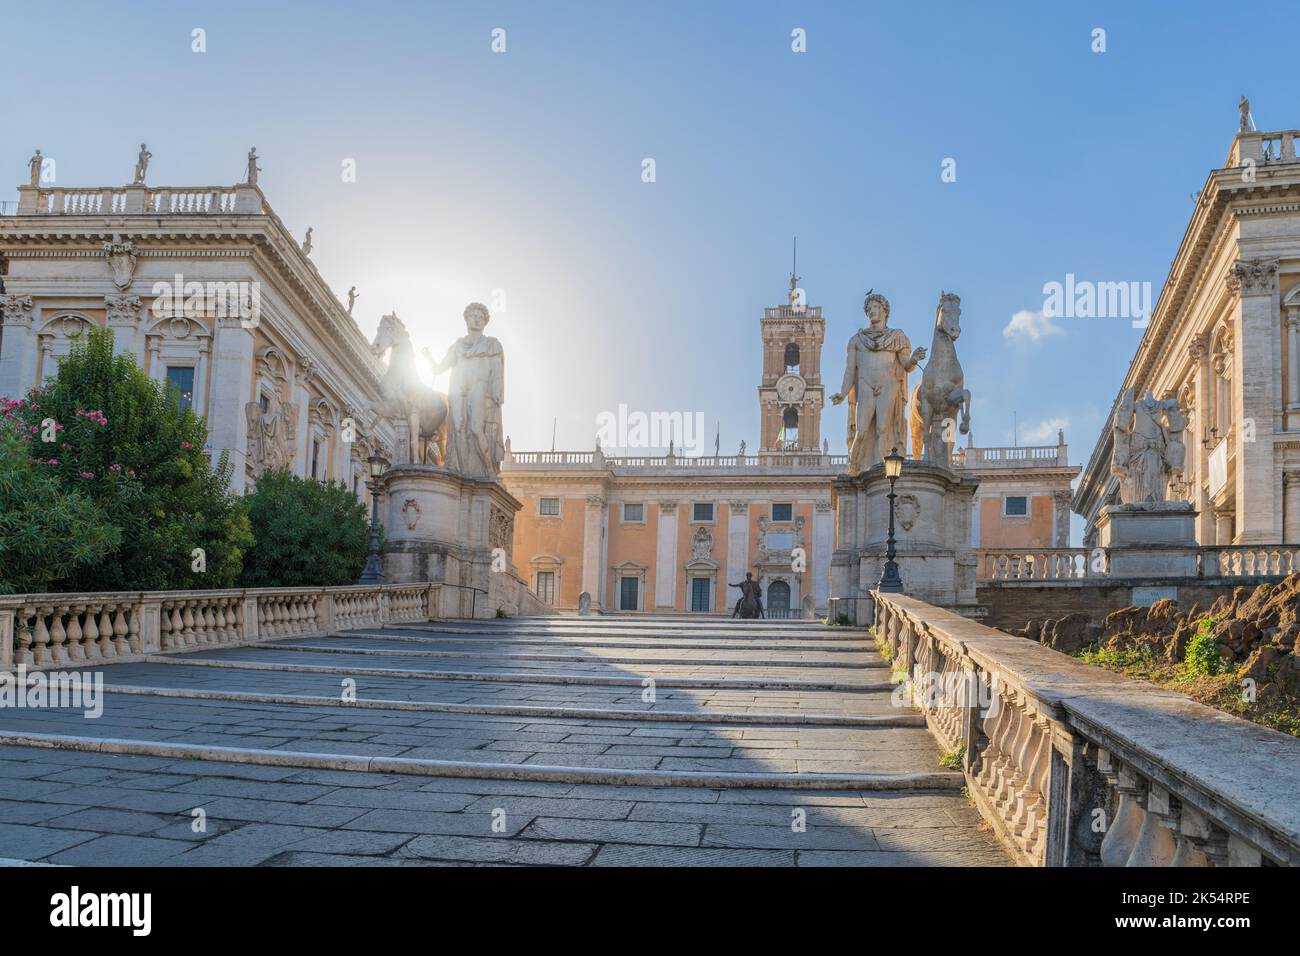 Kapitolshügel in Rom, Italien: Auf dem Hintergrund Statue des römischen Imperators Marcus Aurelius vor dem Palazzo Senatorio. Stockfoto